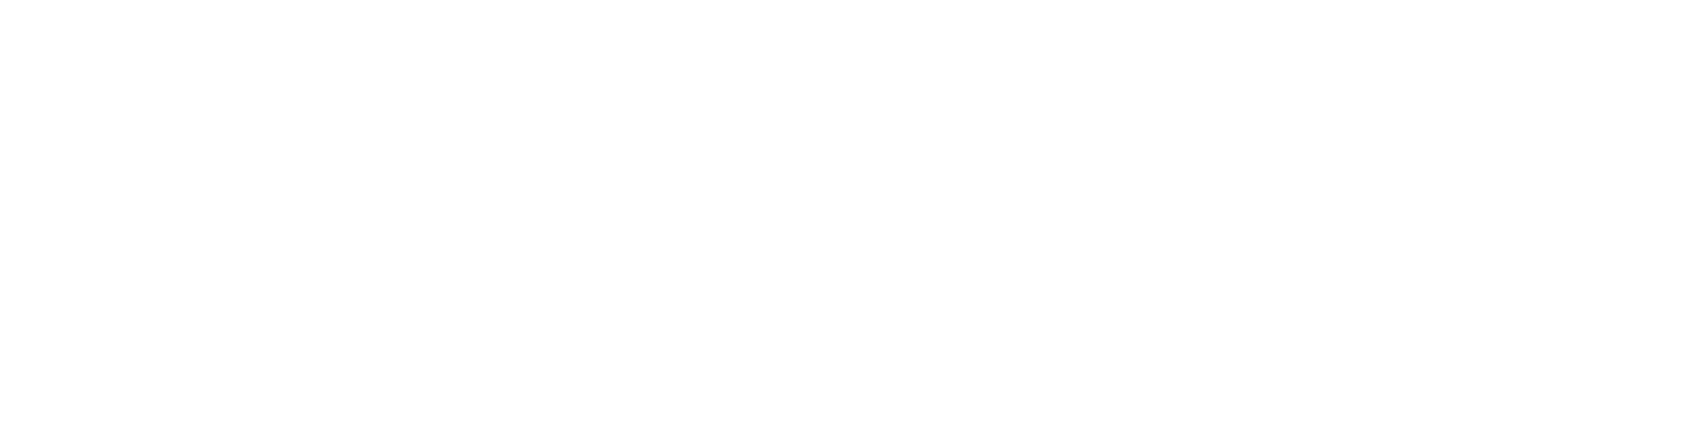 Focus Entertainment logo large for dark backgrounds (transparent PNG)